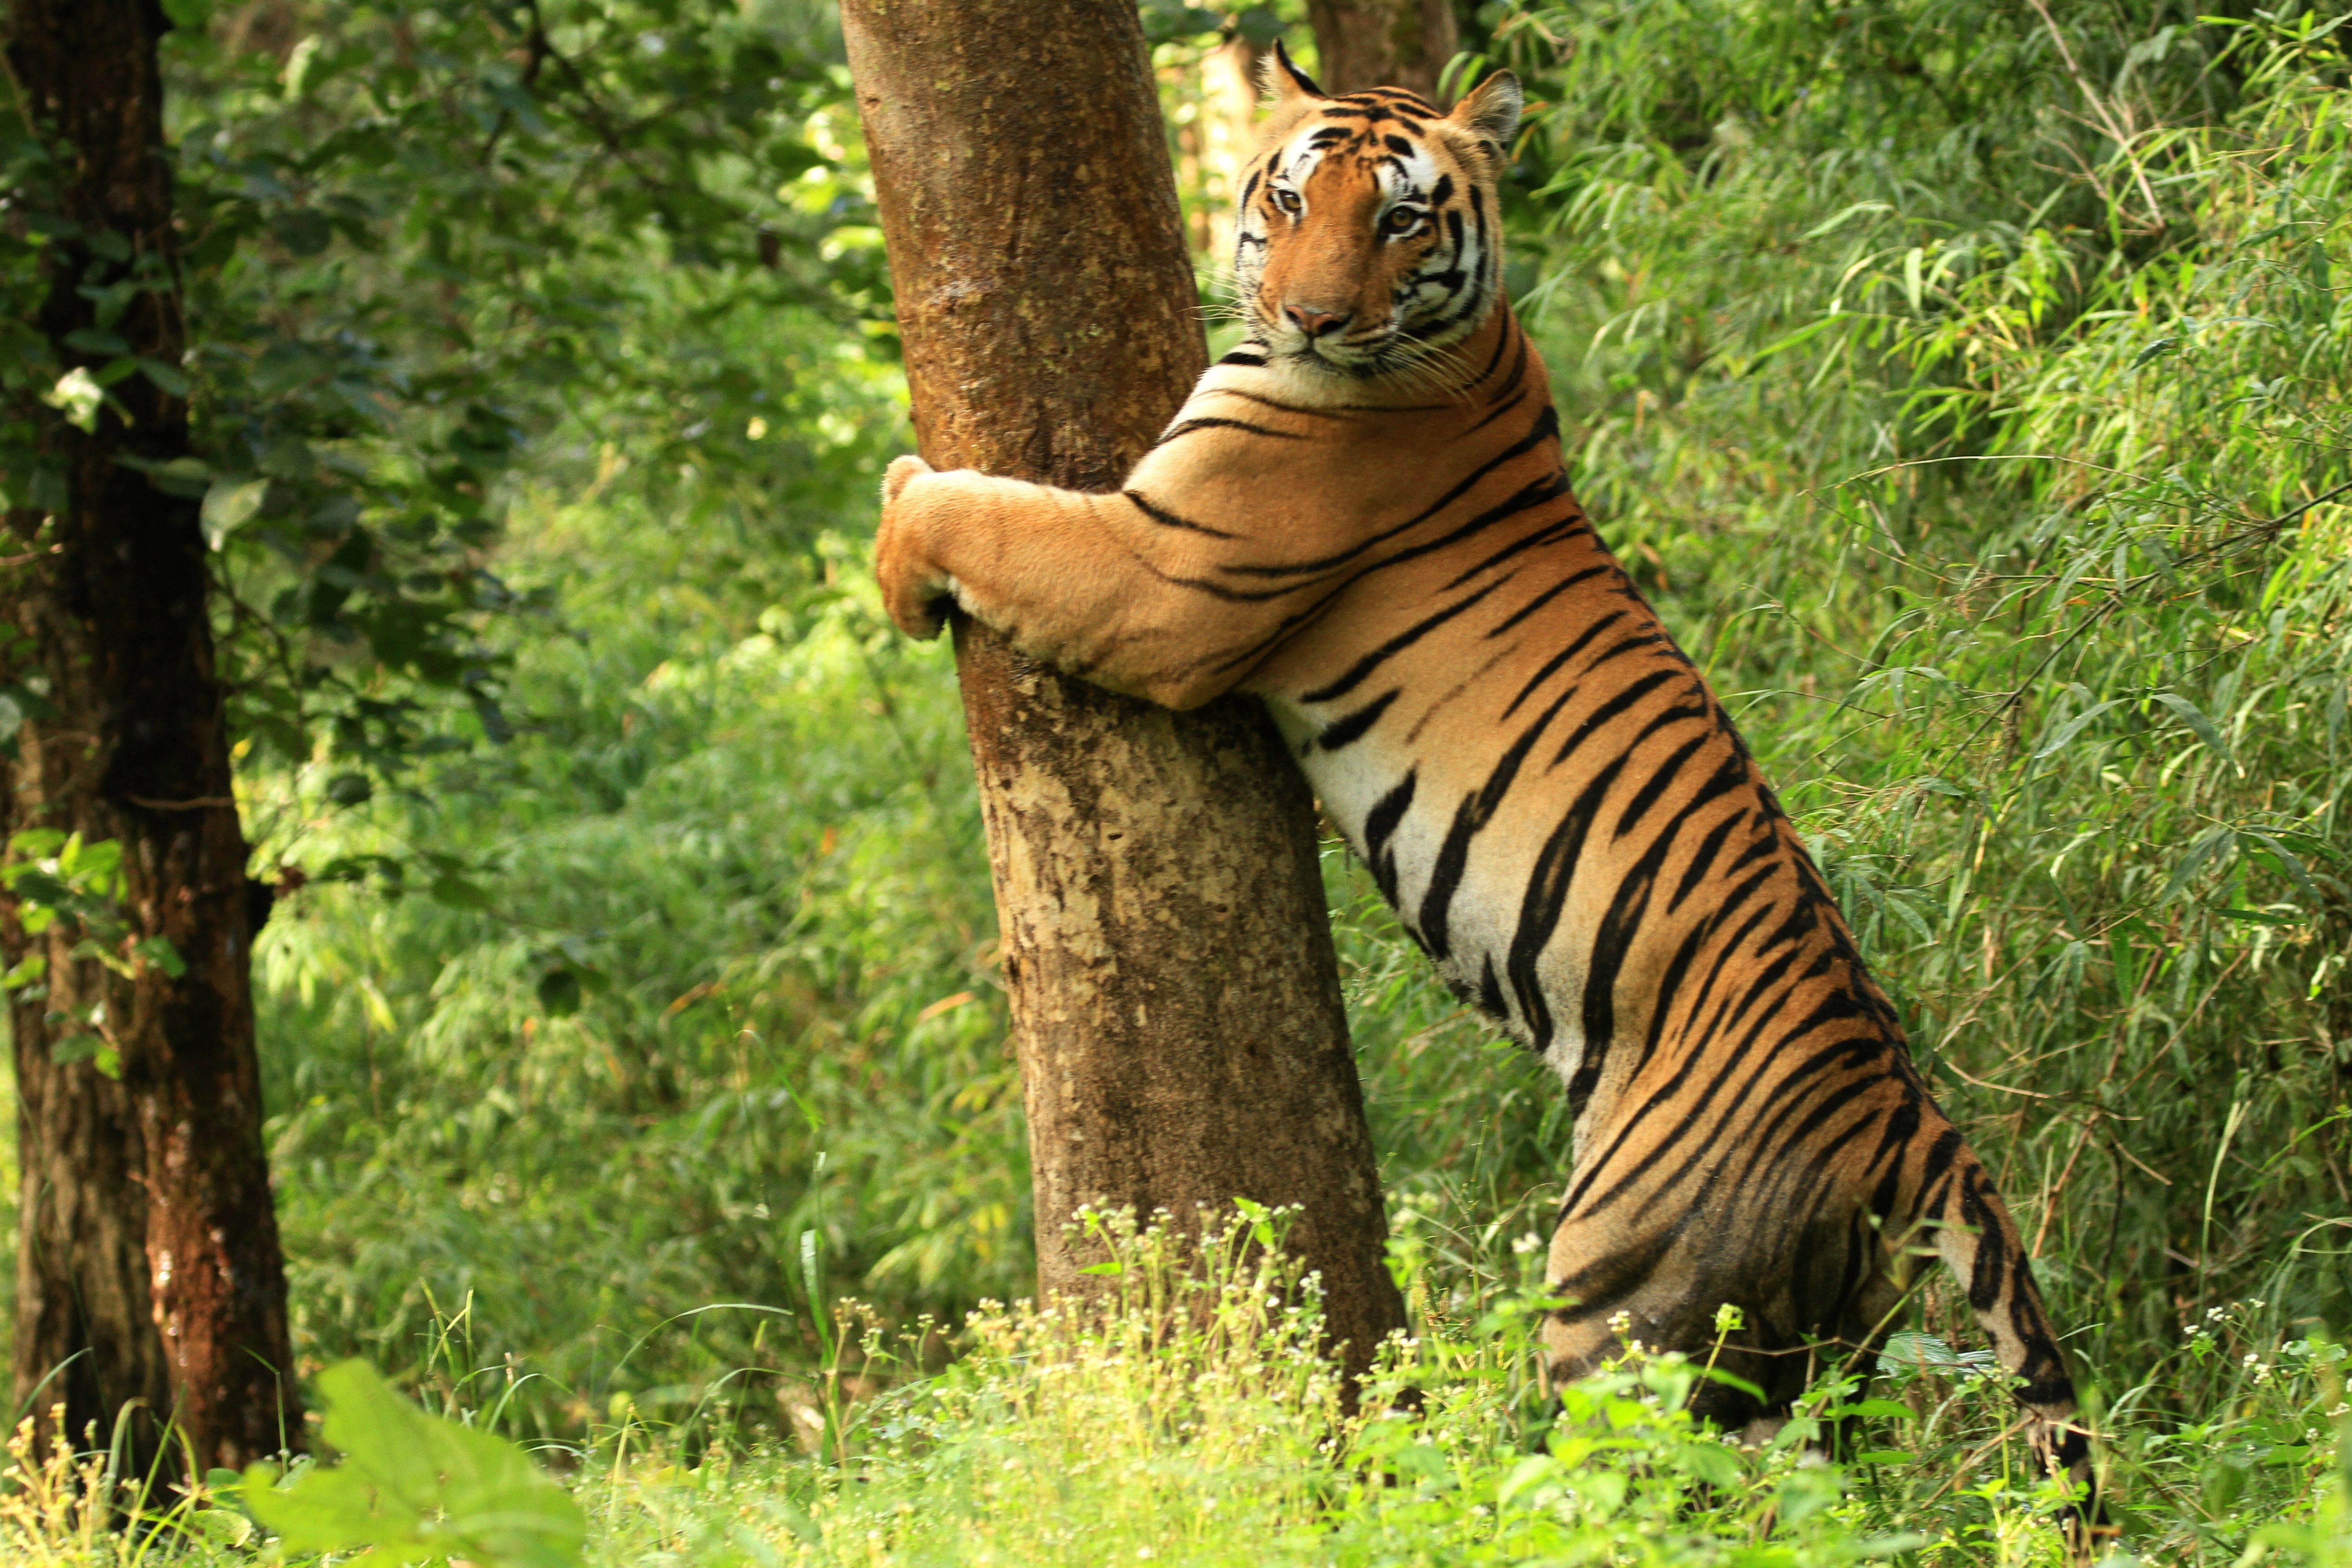 A tiger hugging a tree.